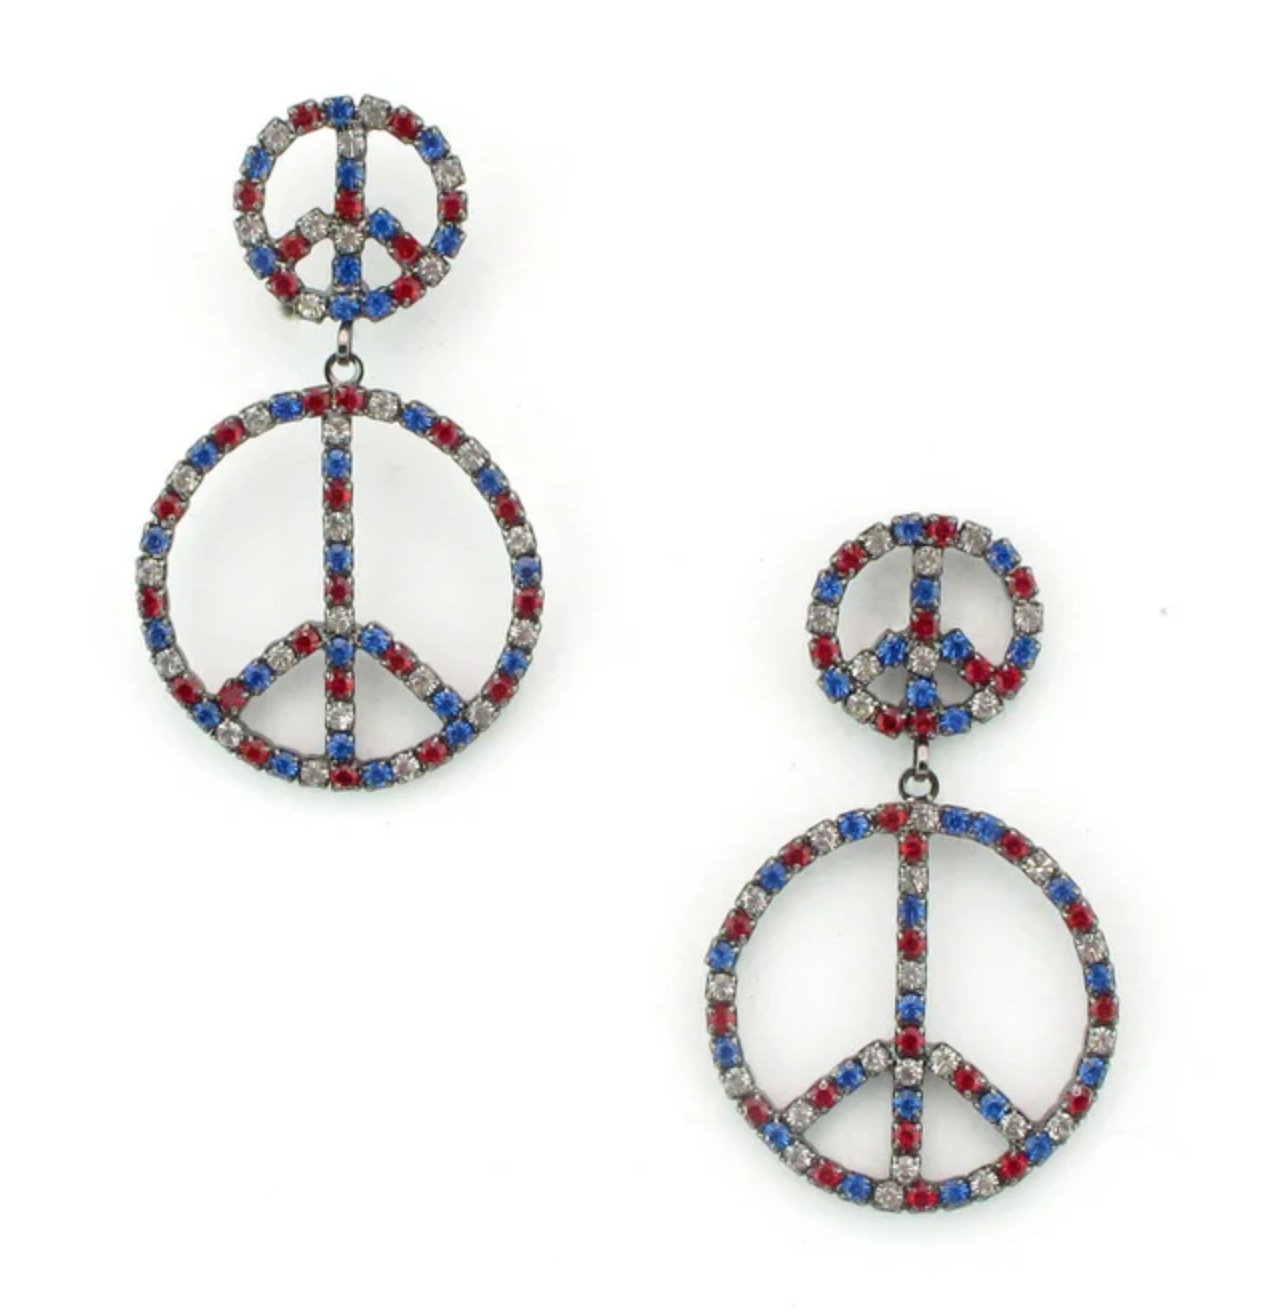 USA Double Peace Earrings - Amor Lafayette